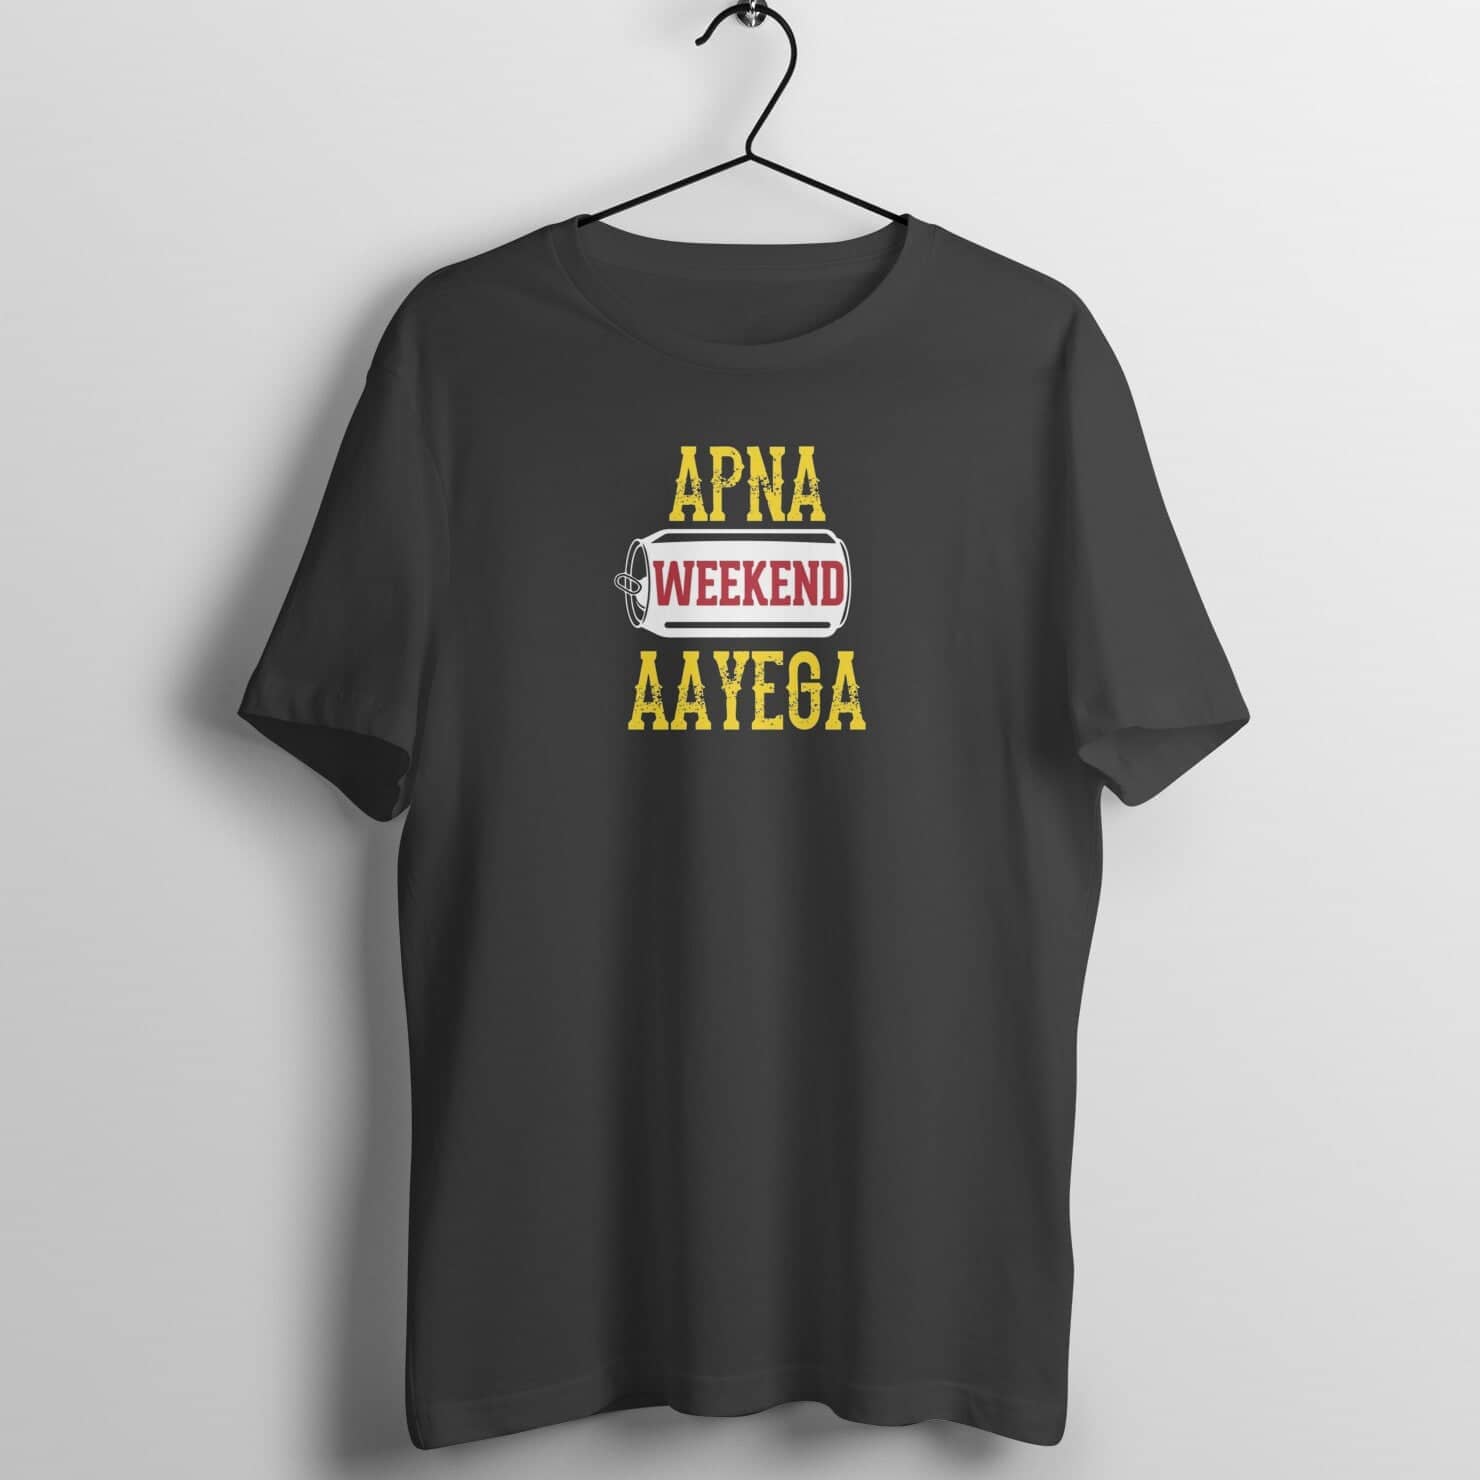 Apna Weekend Aayega Exclusive Black T Shirt for Men and Women Printrove Black S 